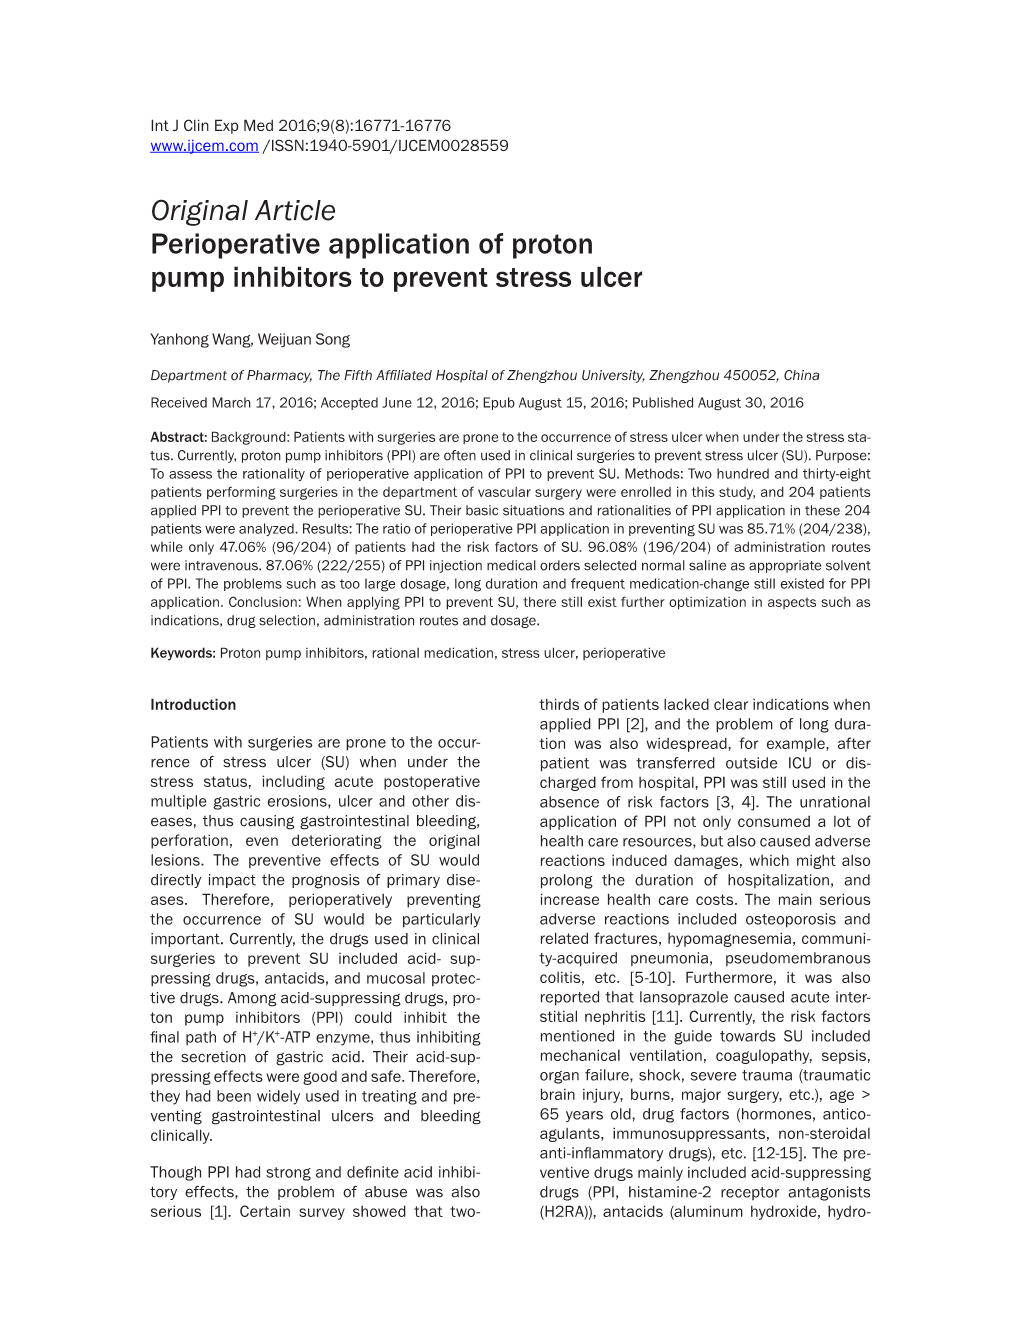 Original Article Perioperative Application of Proton Pump Inhibitors to Prevent Stress Ulcer